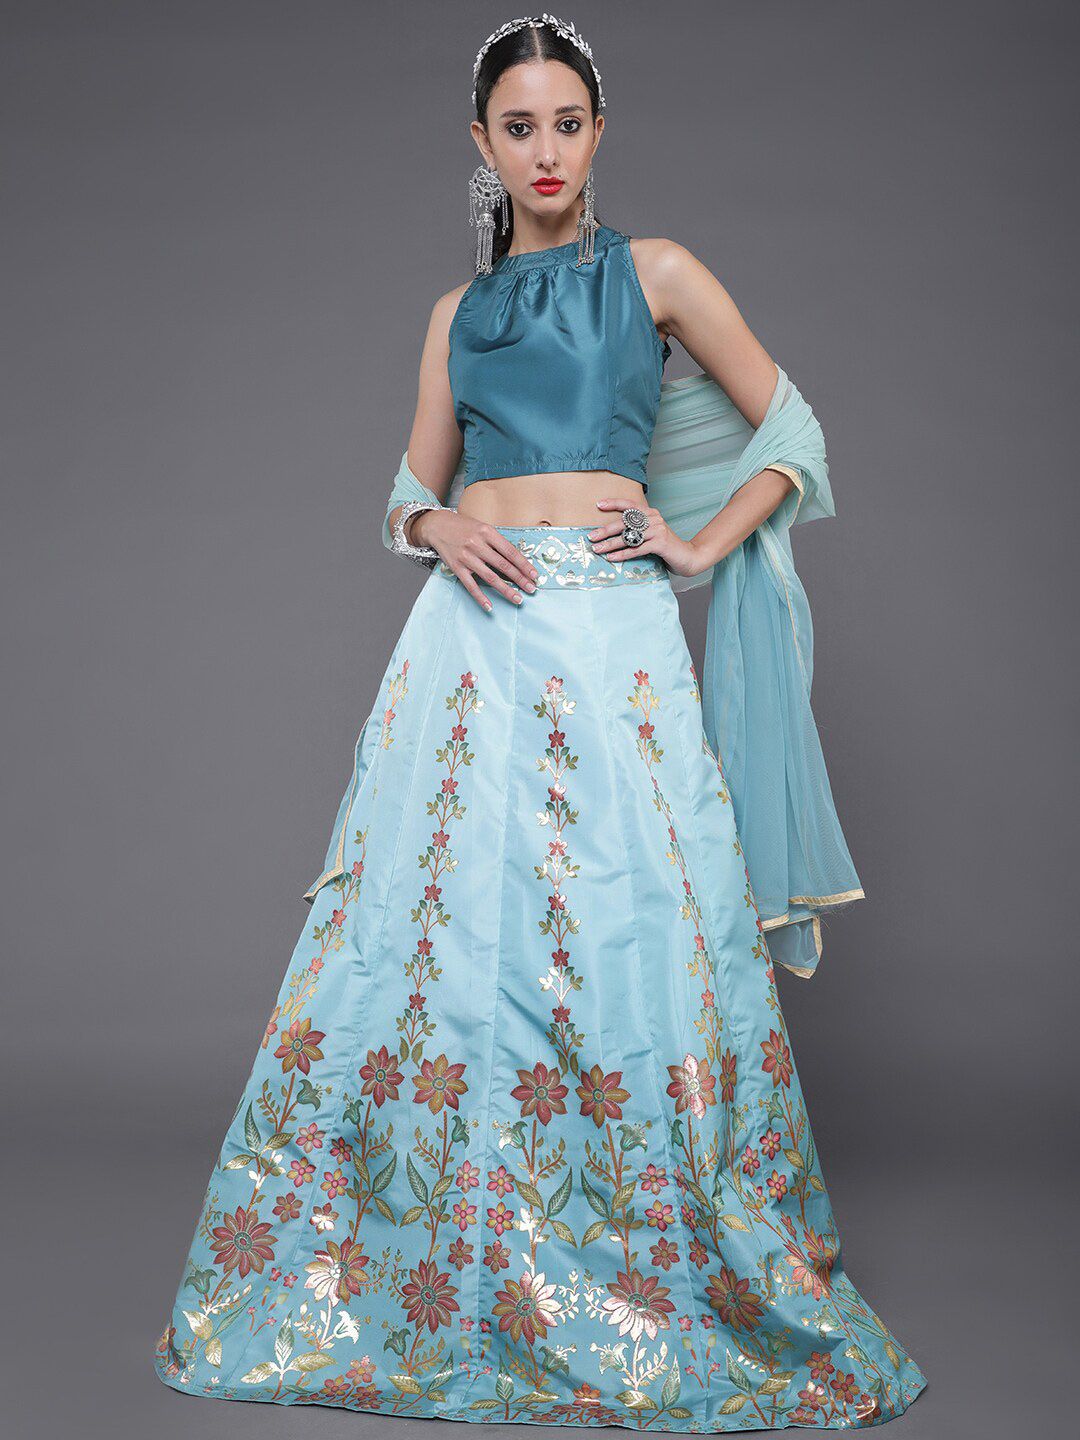 saubhagya Teal & Blue Printed Ready to Wear Lehenga & Blouse With Dupatta Price in India